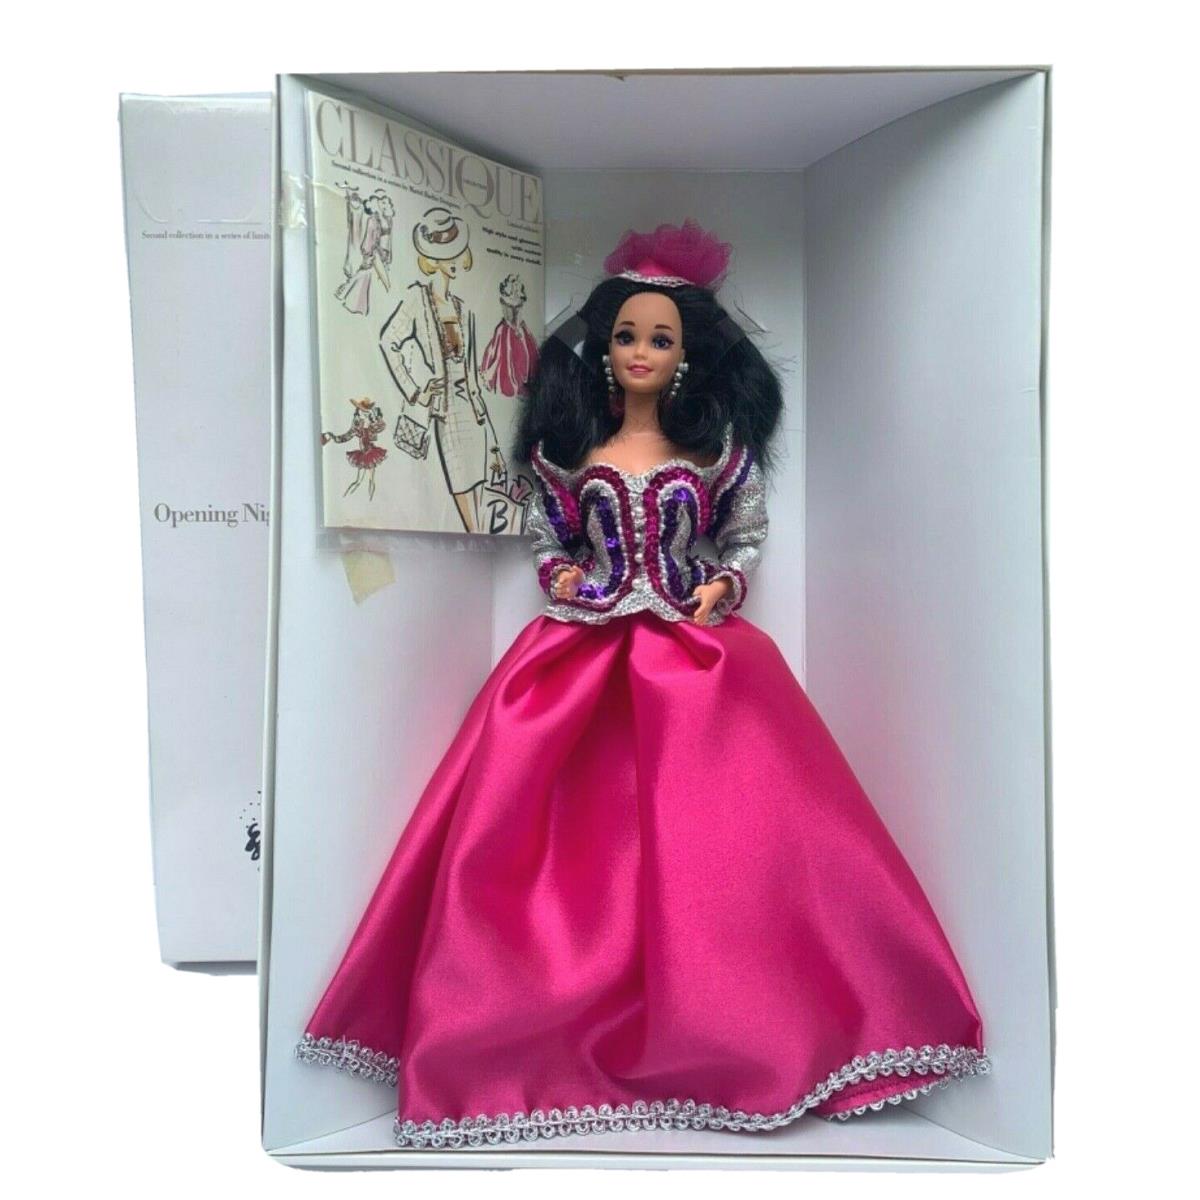 Opening Night Barbie Doll Classique Series Vintage Mattel 1993 Nrfb